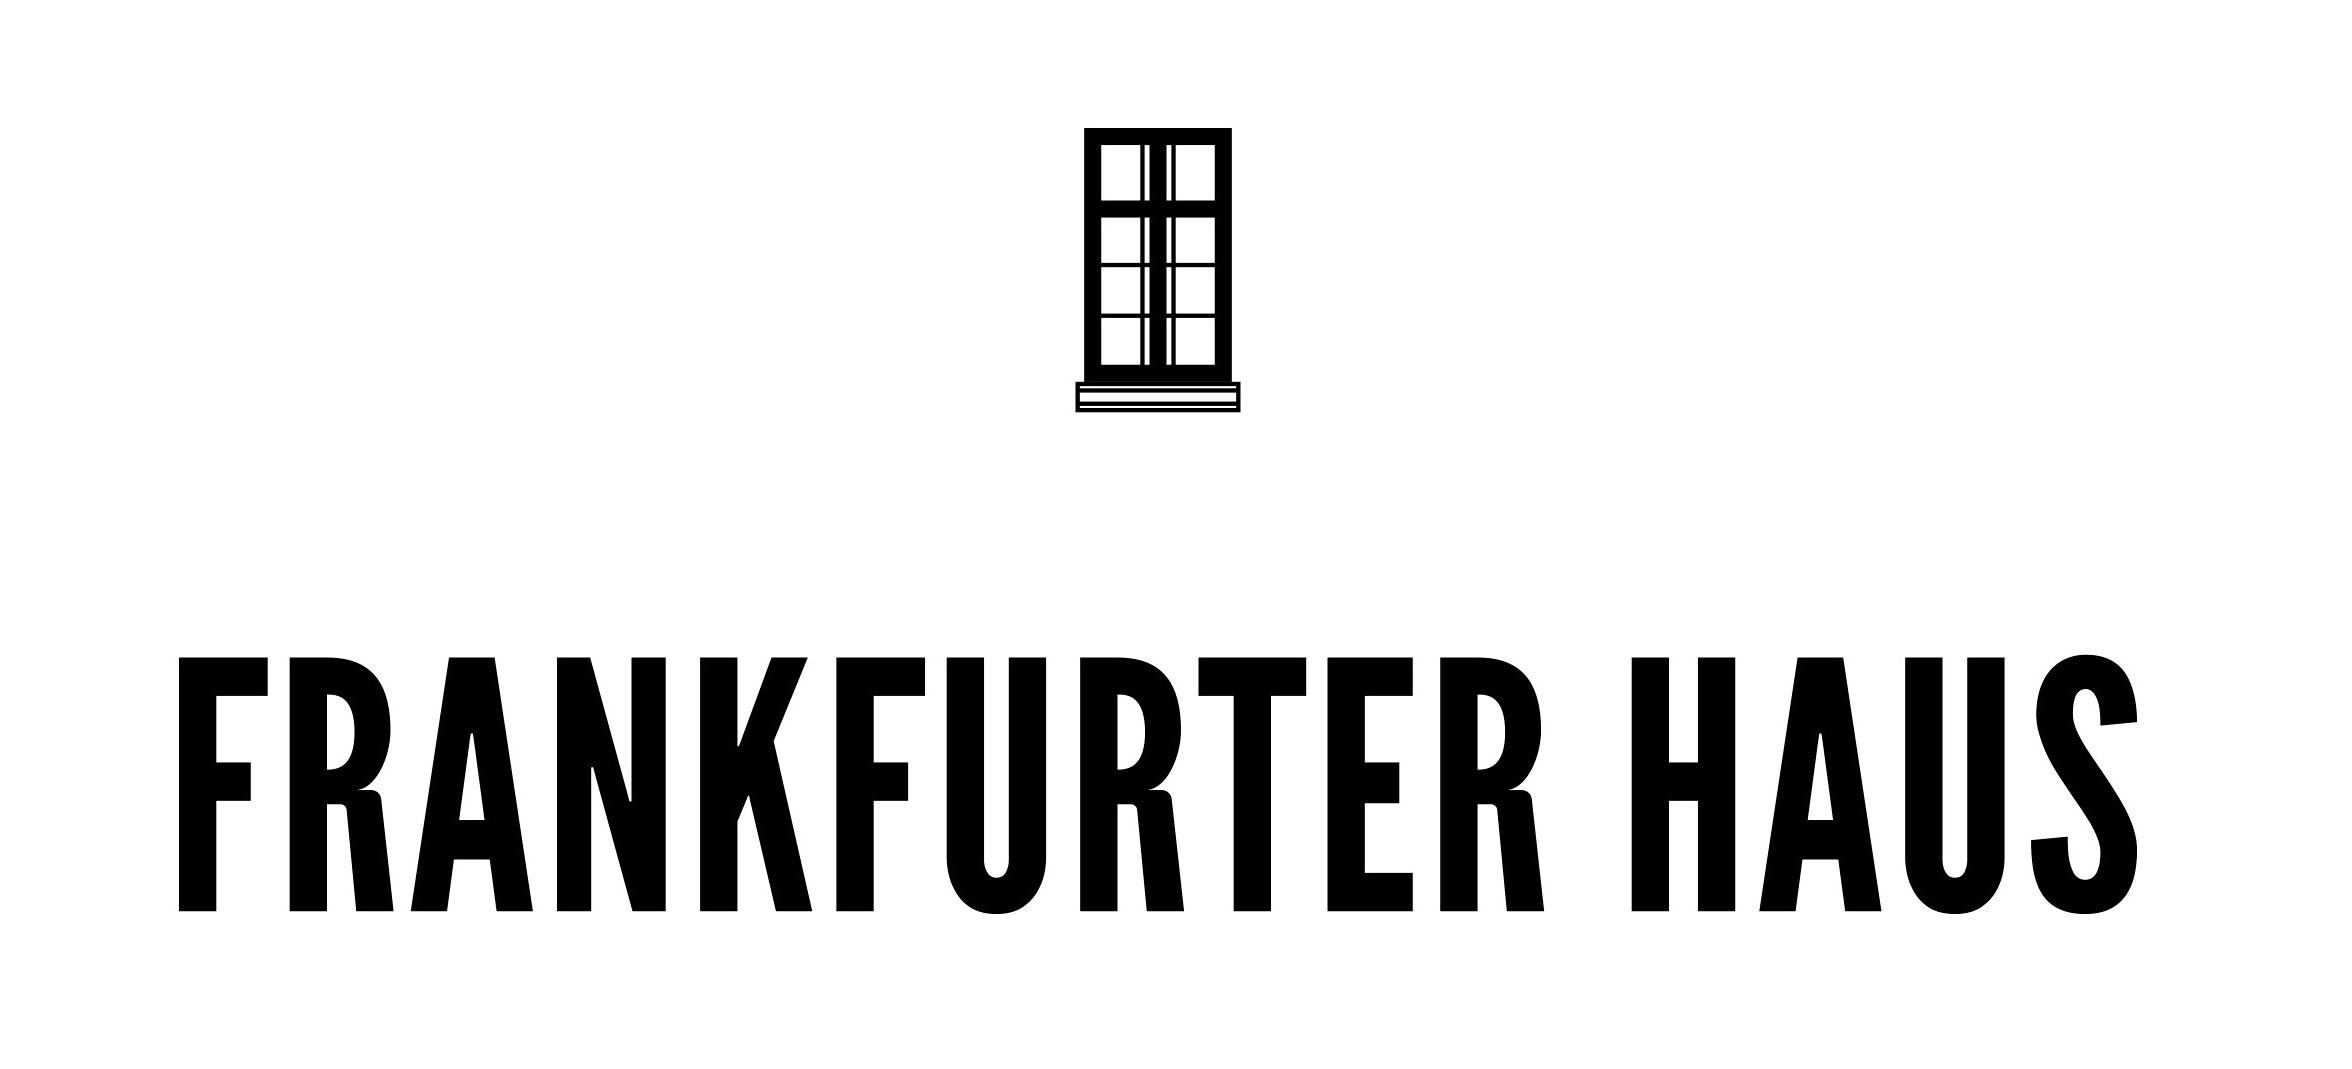 Bilder Frankfurter Haus